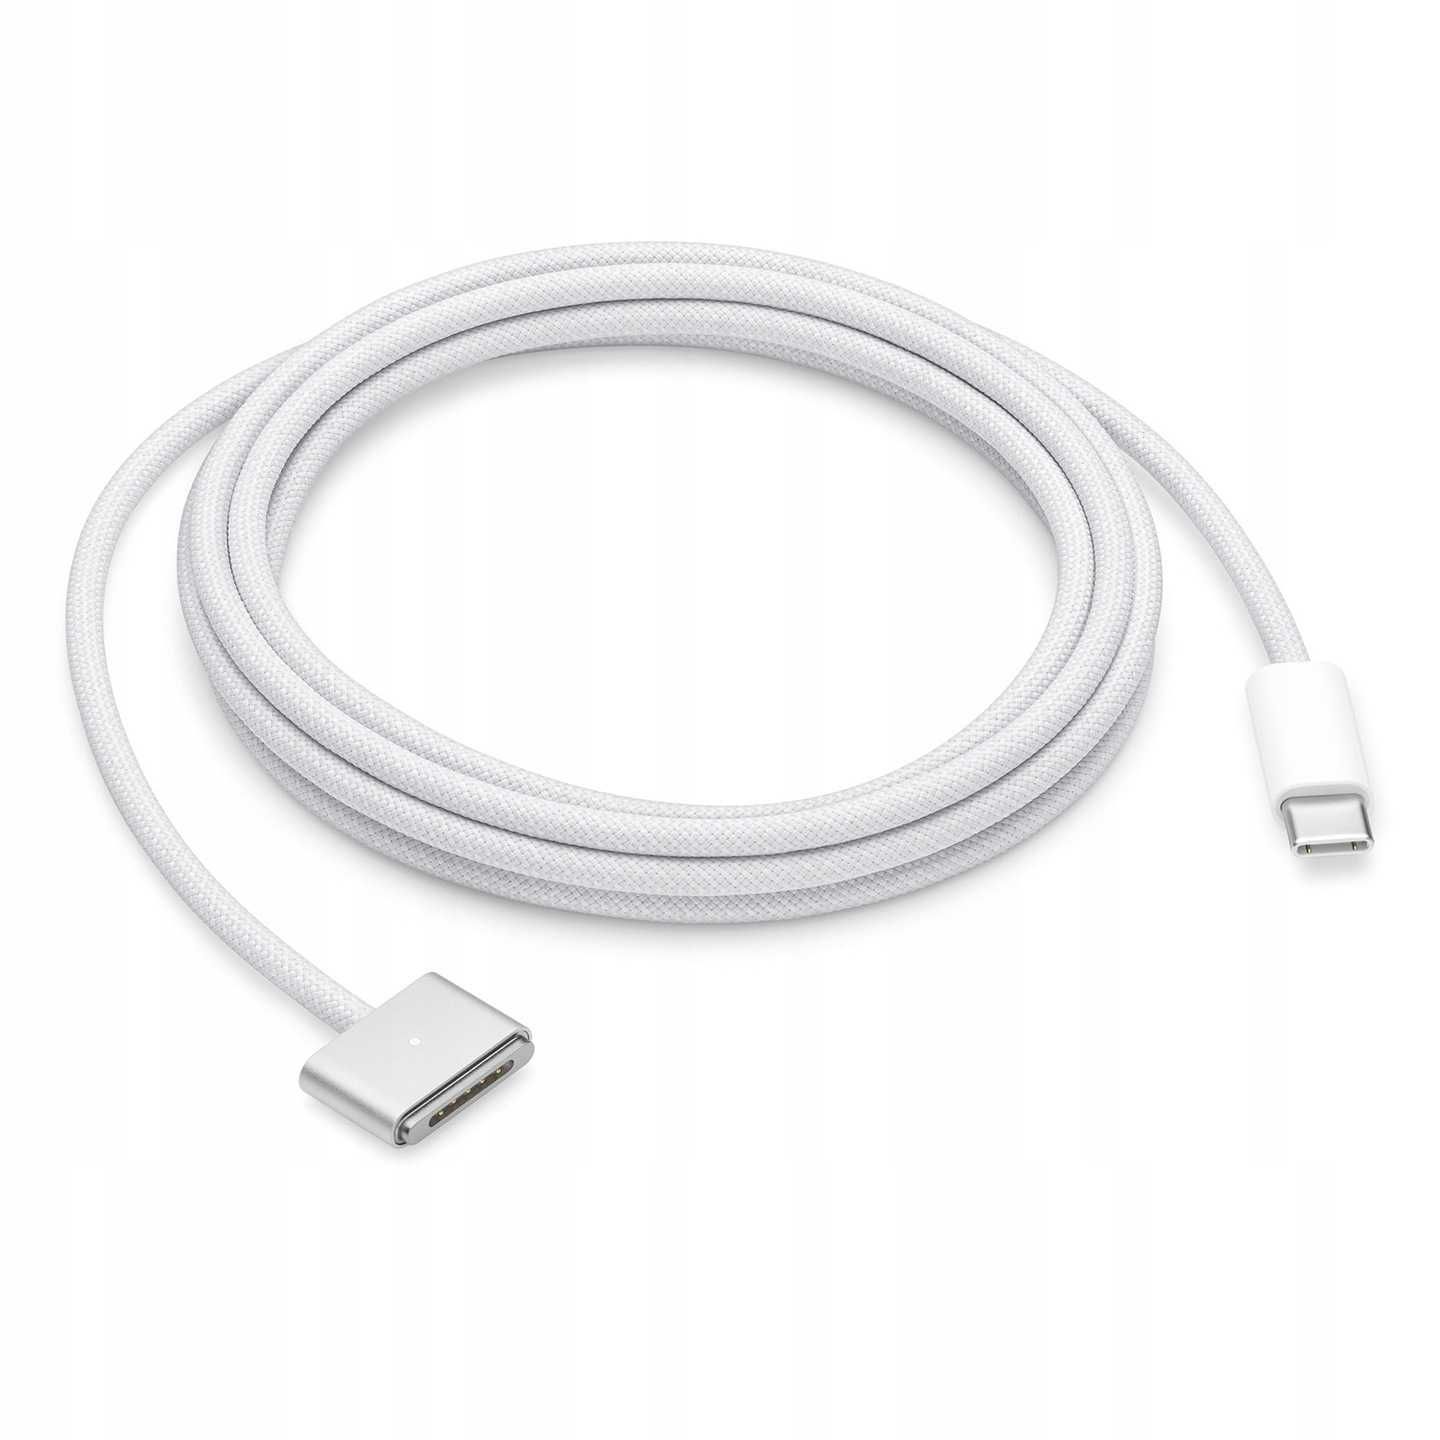 KABEL PRZEWÓD Przewody Kable Apple MacBook USB-C MagSafe 3 Silver 2m